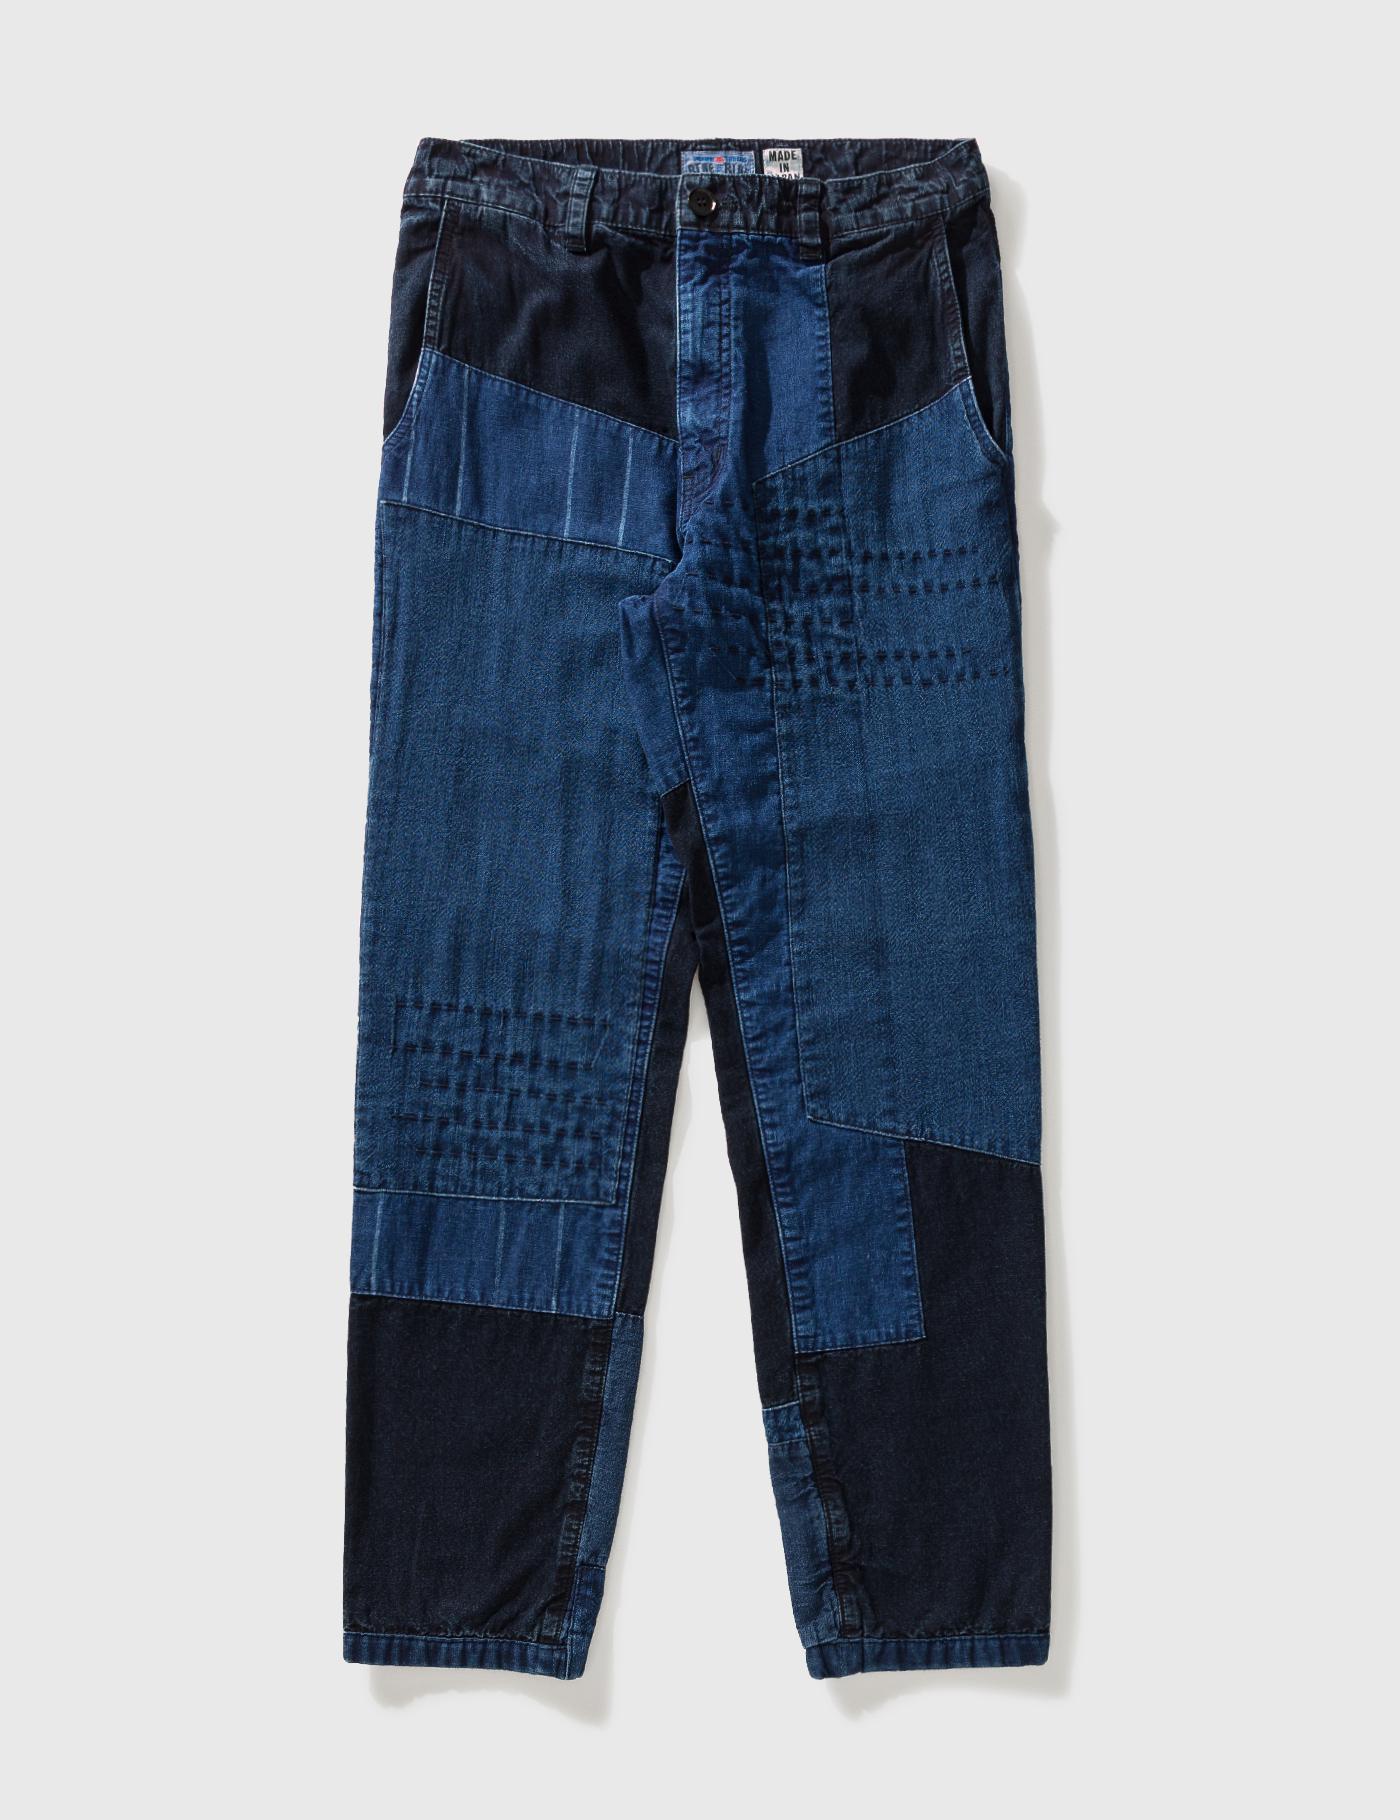 Indigo Matsuri Cross Nenrin Patchwork Pants by BLUE BLUE JAPAN